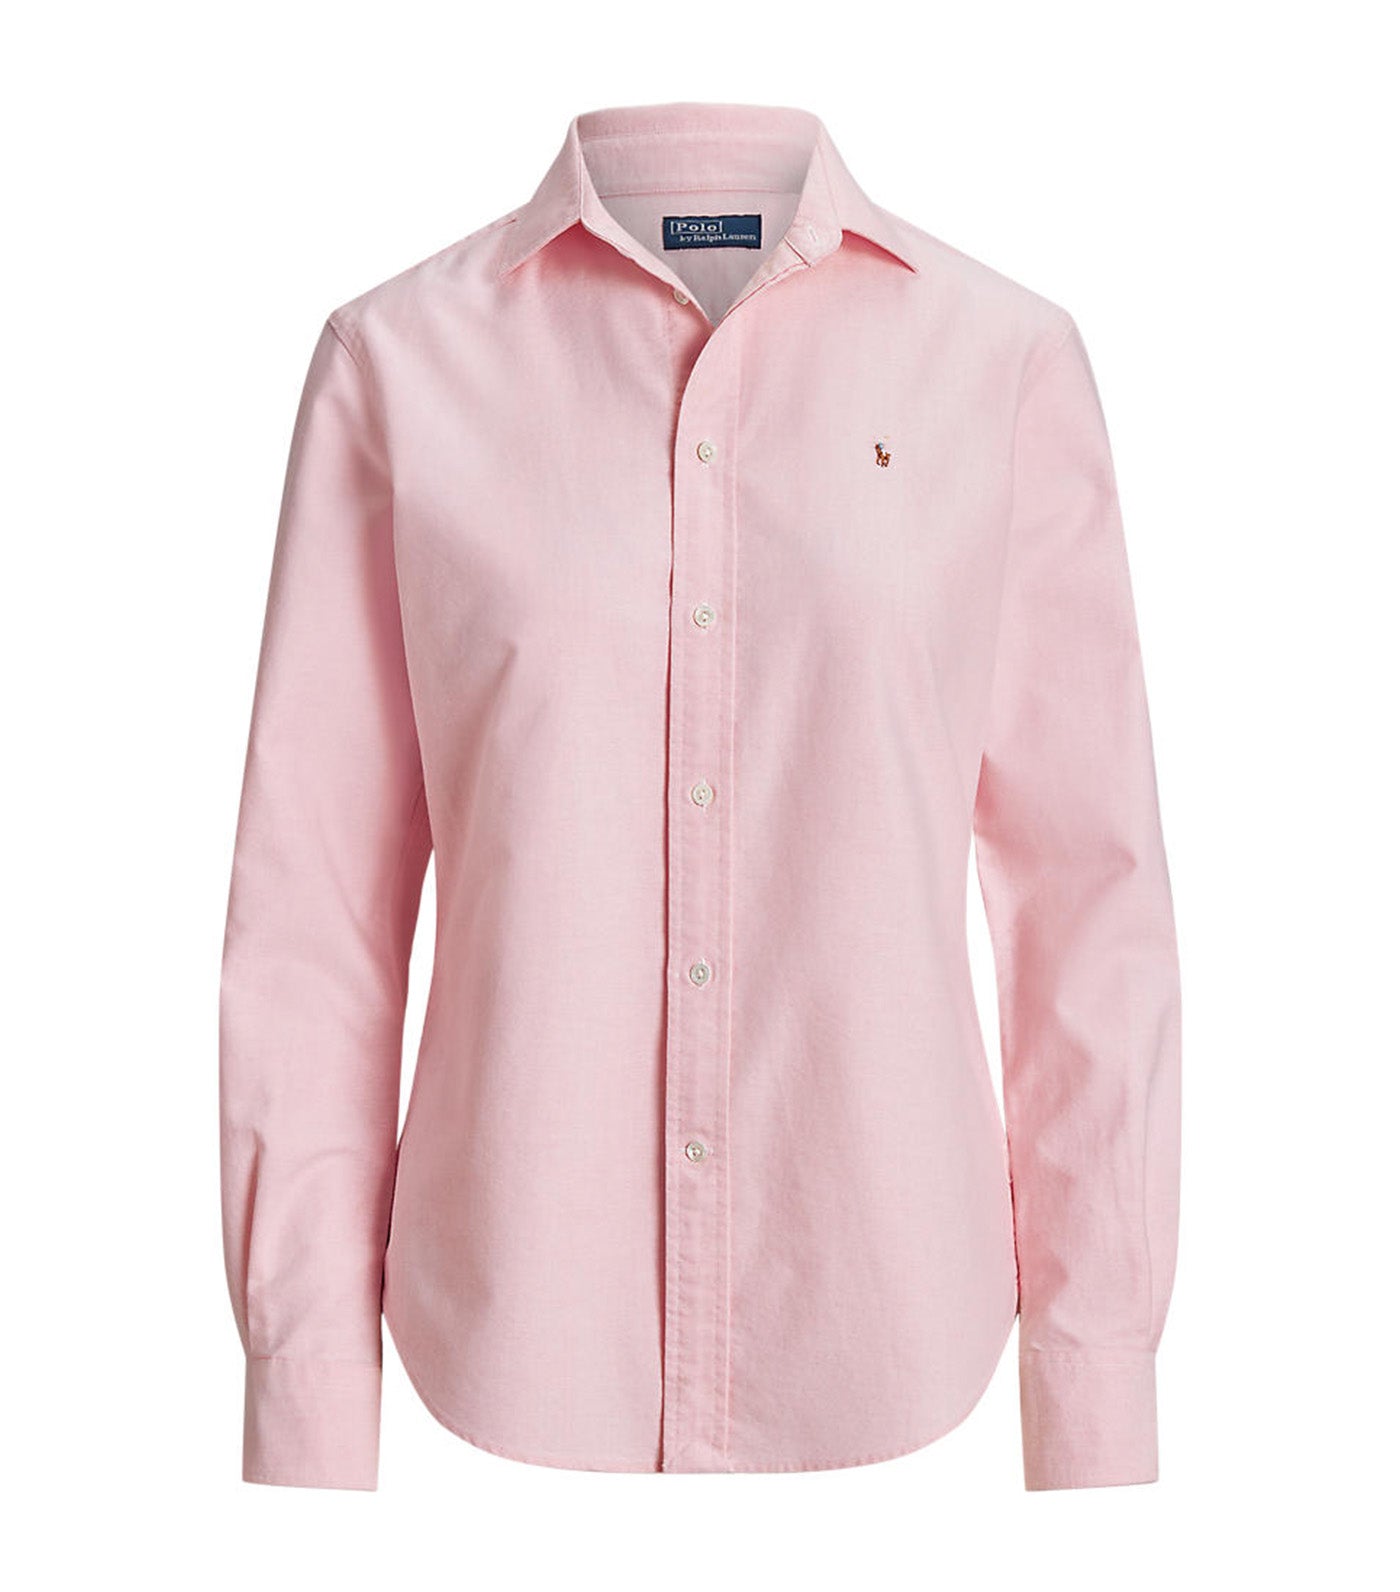 Polo Ralph Lauren Women's Classic Fit Oxford Shirt Bath Pink